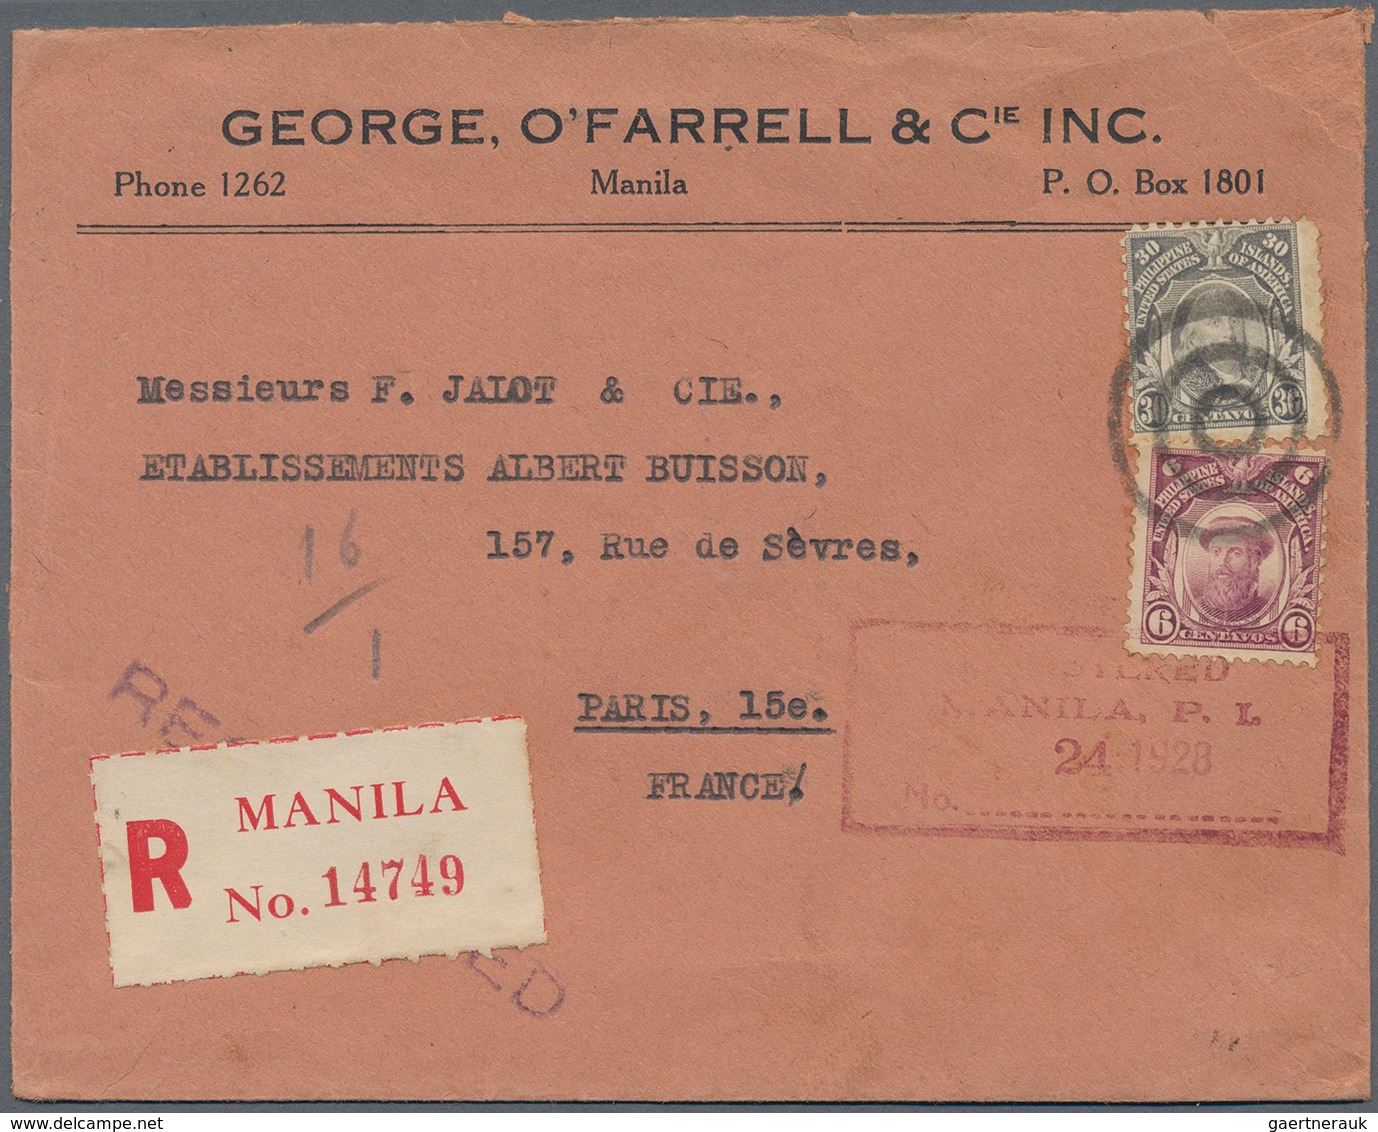 Vereinigte Staaten von Amerika: 1838/1933: Lot of 28 envelopes and postal stationeries including pre